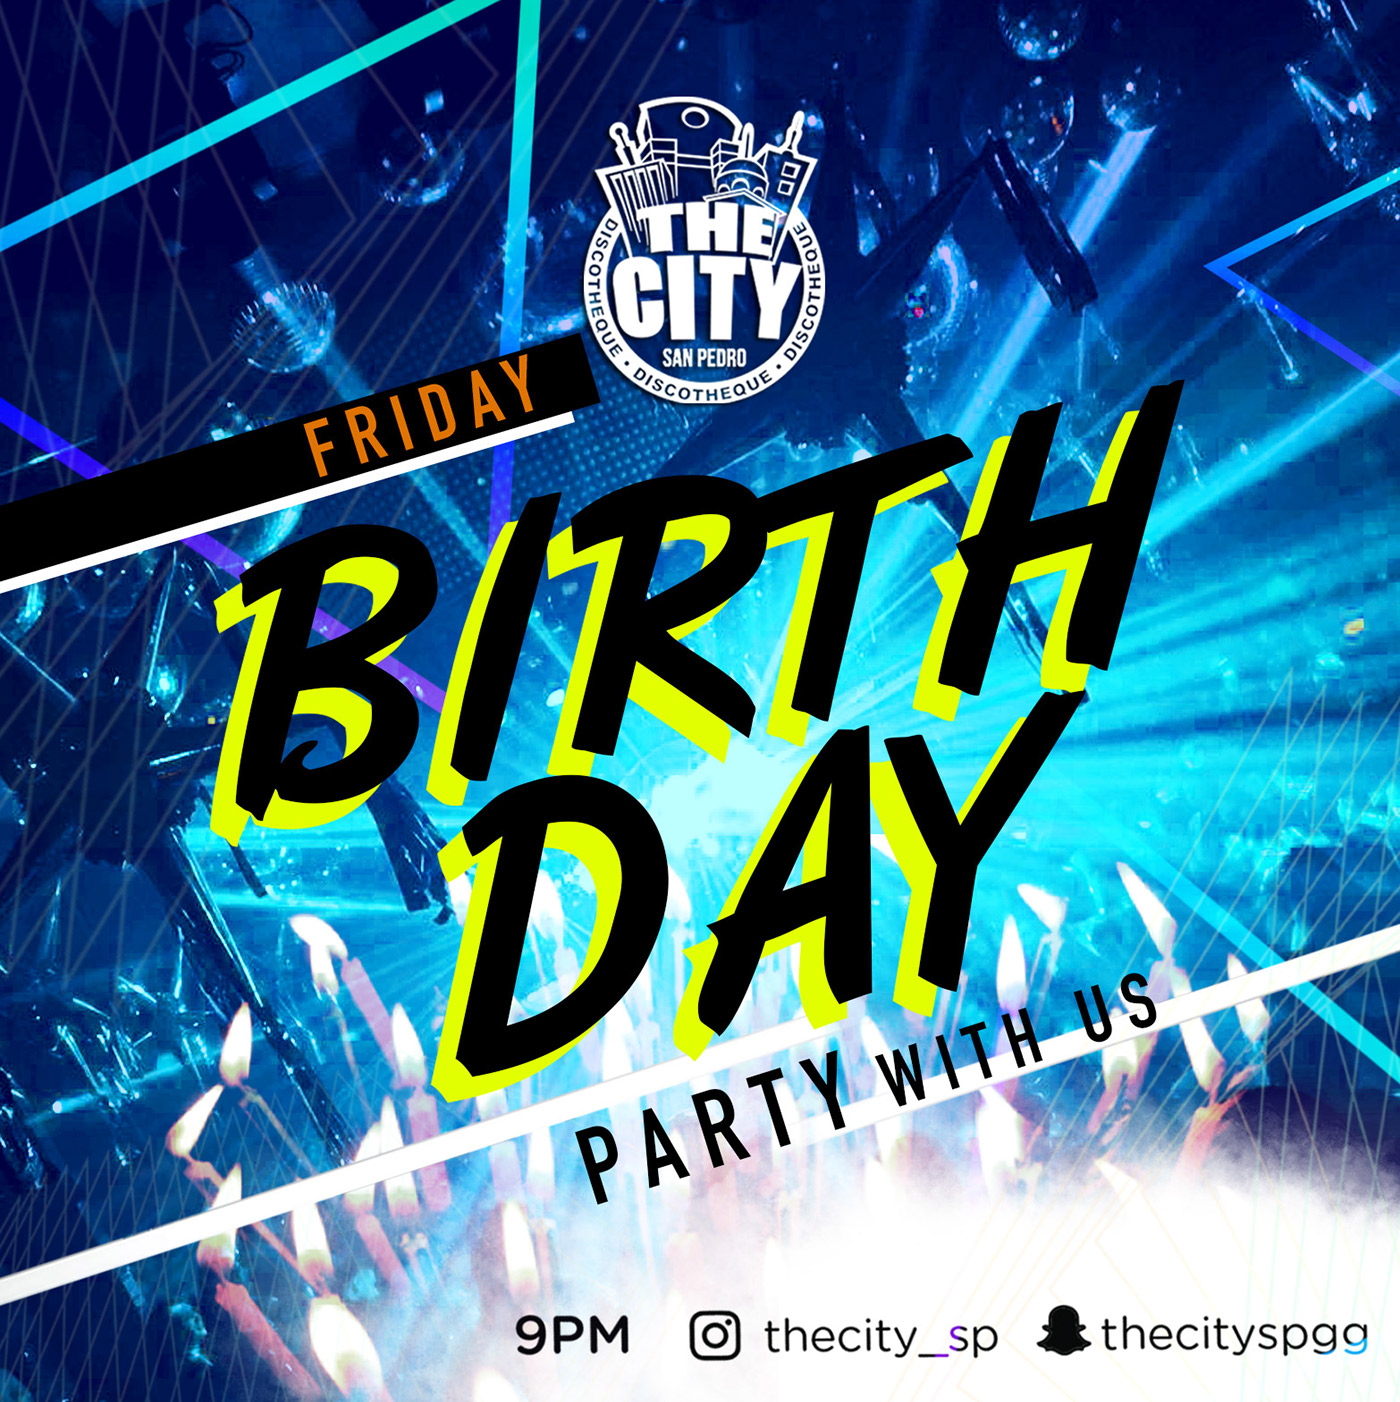 the city ads socialnetwork nightclub party poster celebrate dj djs colors